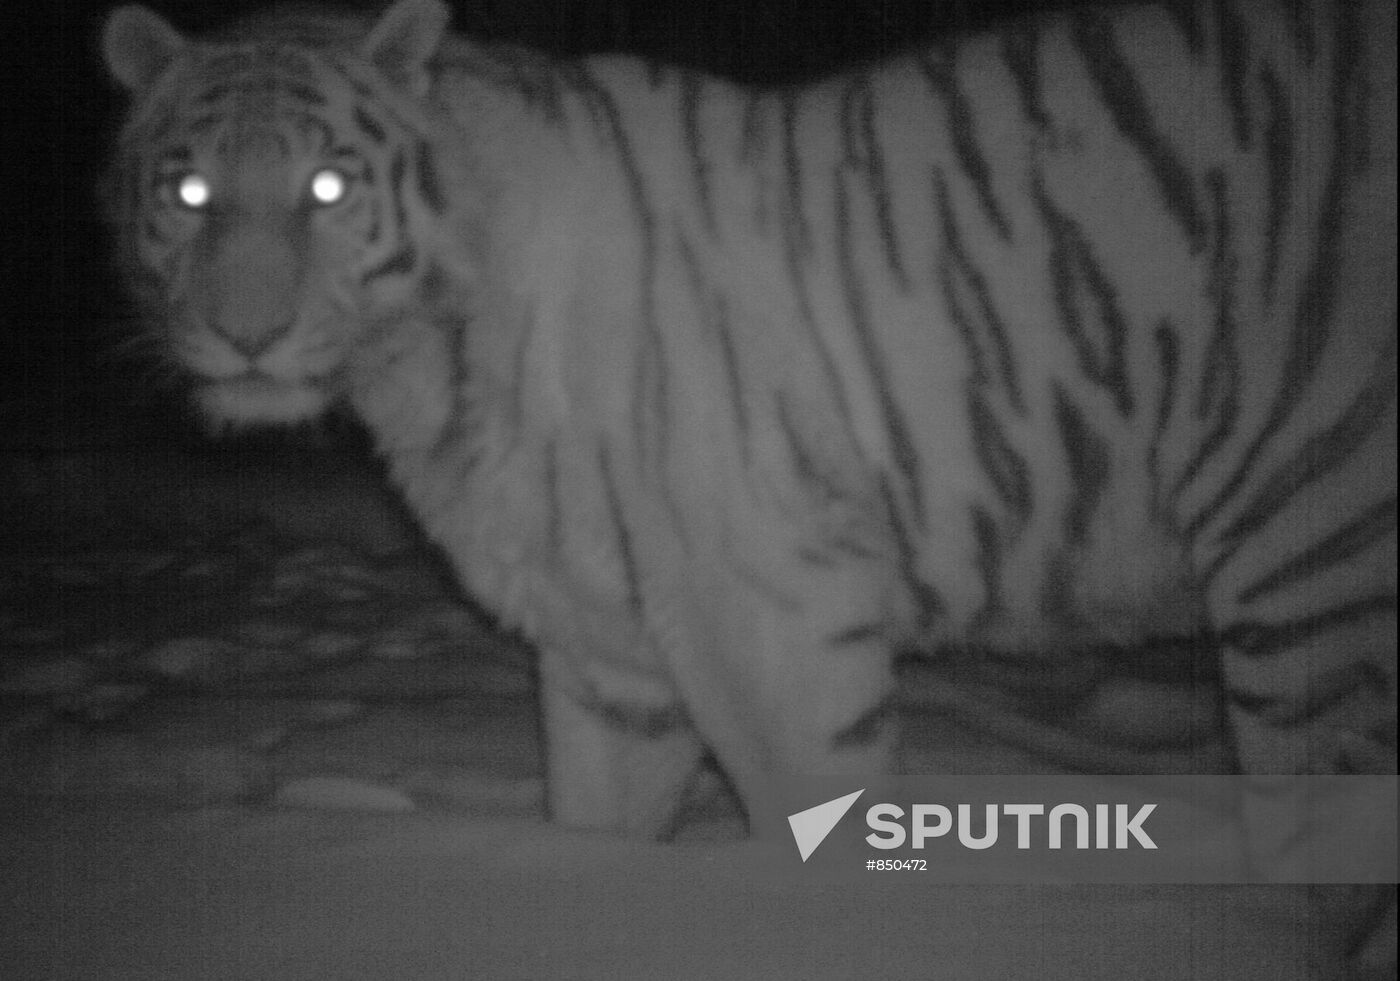 Photo of tigress Serga